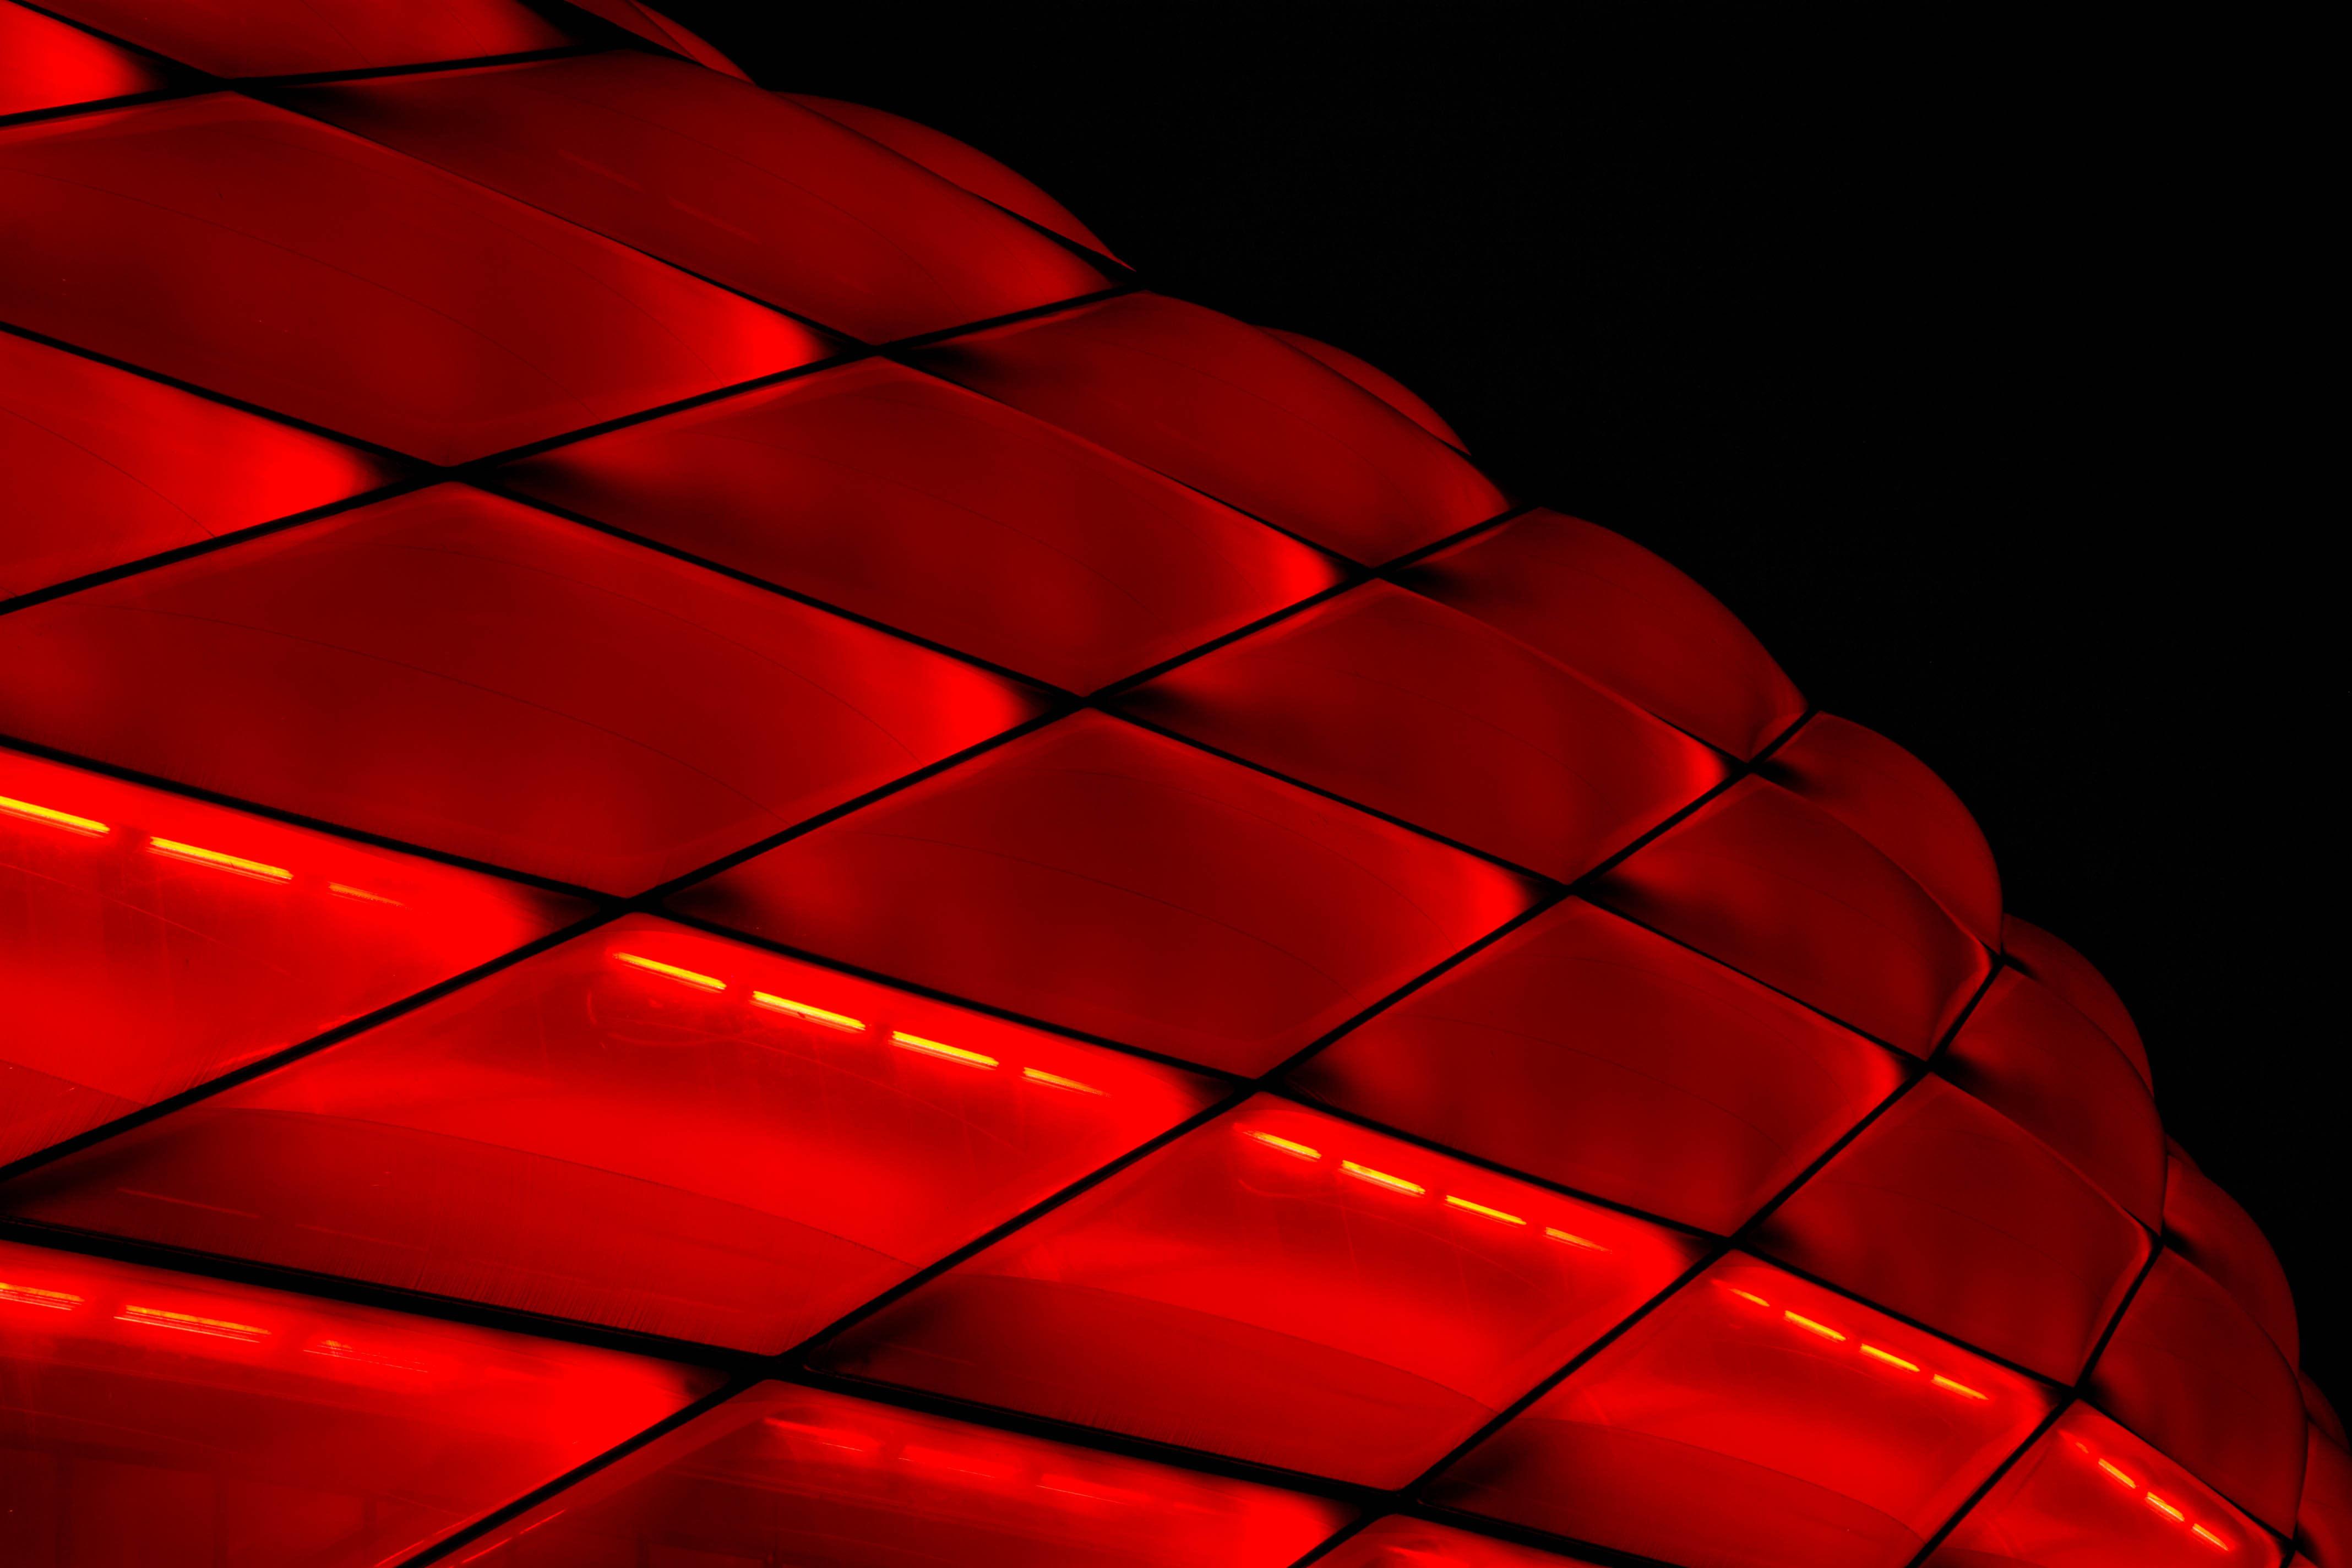 1920x1080 Background backlight, architecture, red, building, miscellanea, miscellaneous, grid, illumination, facade